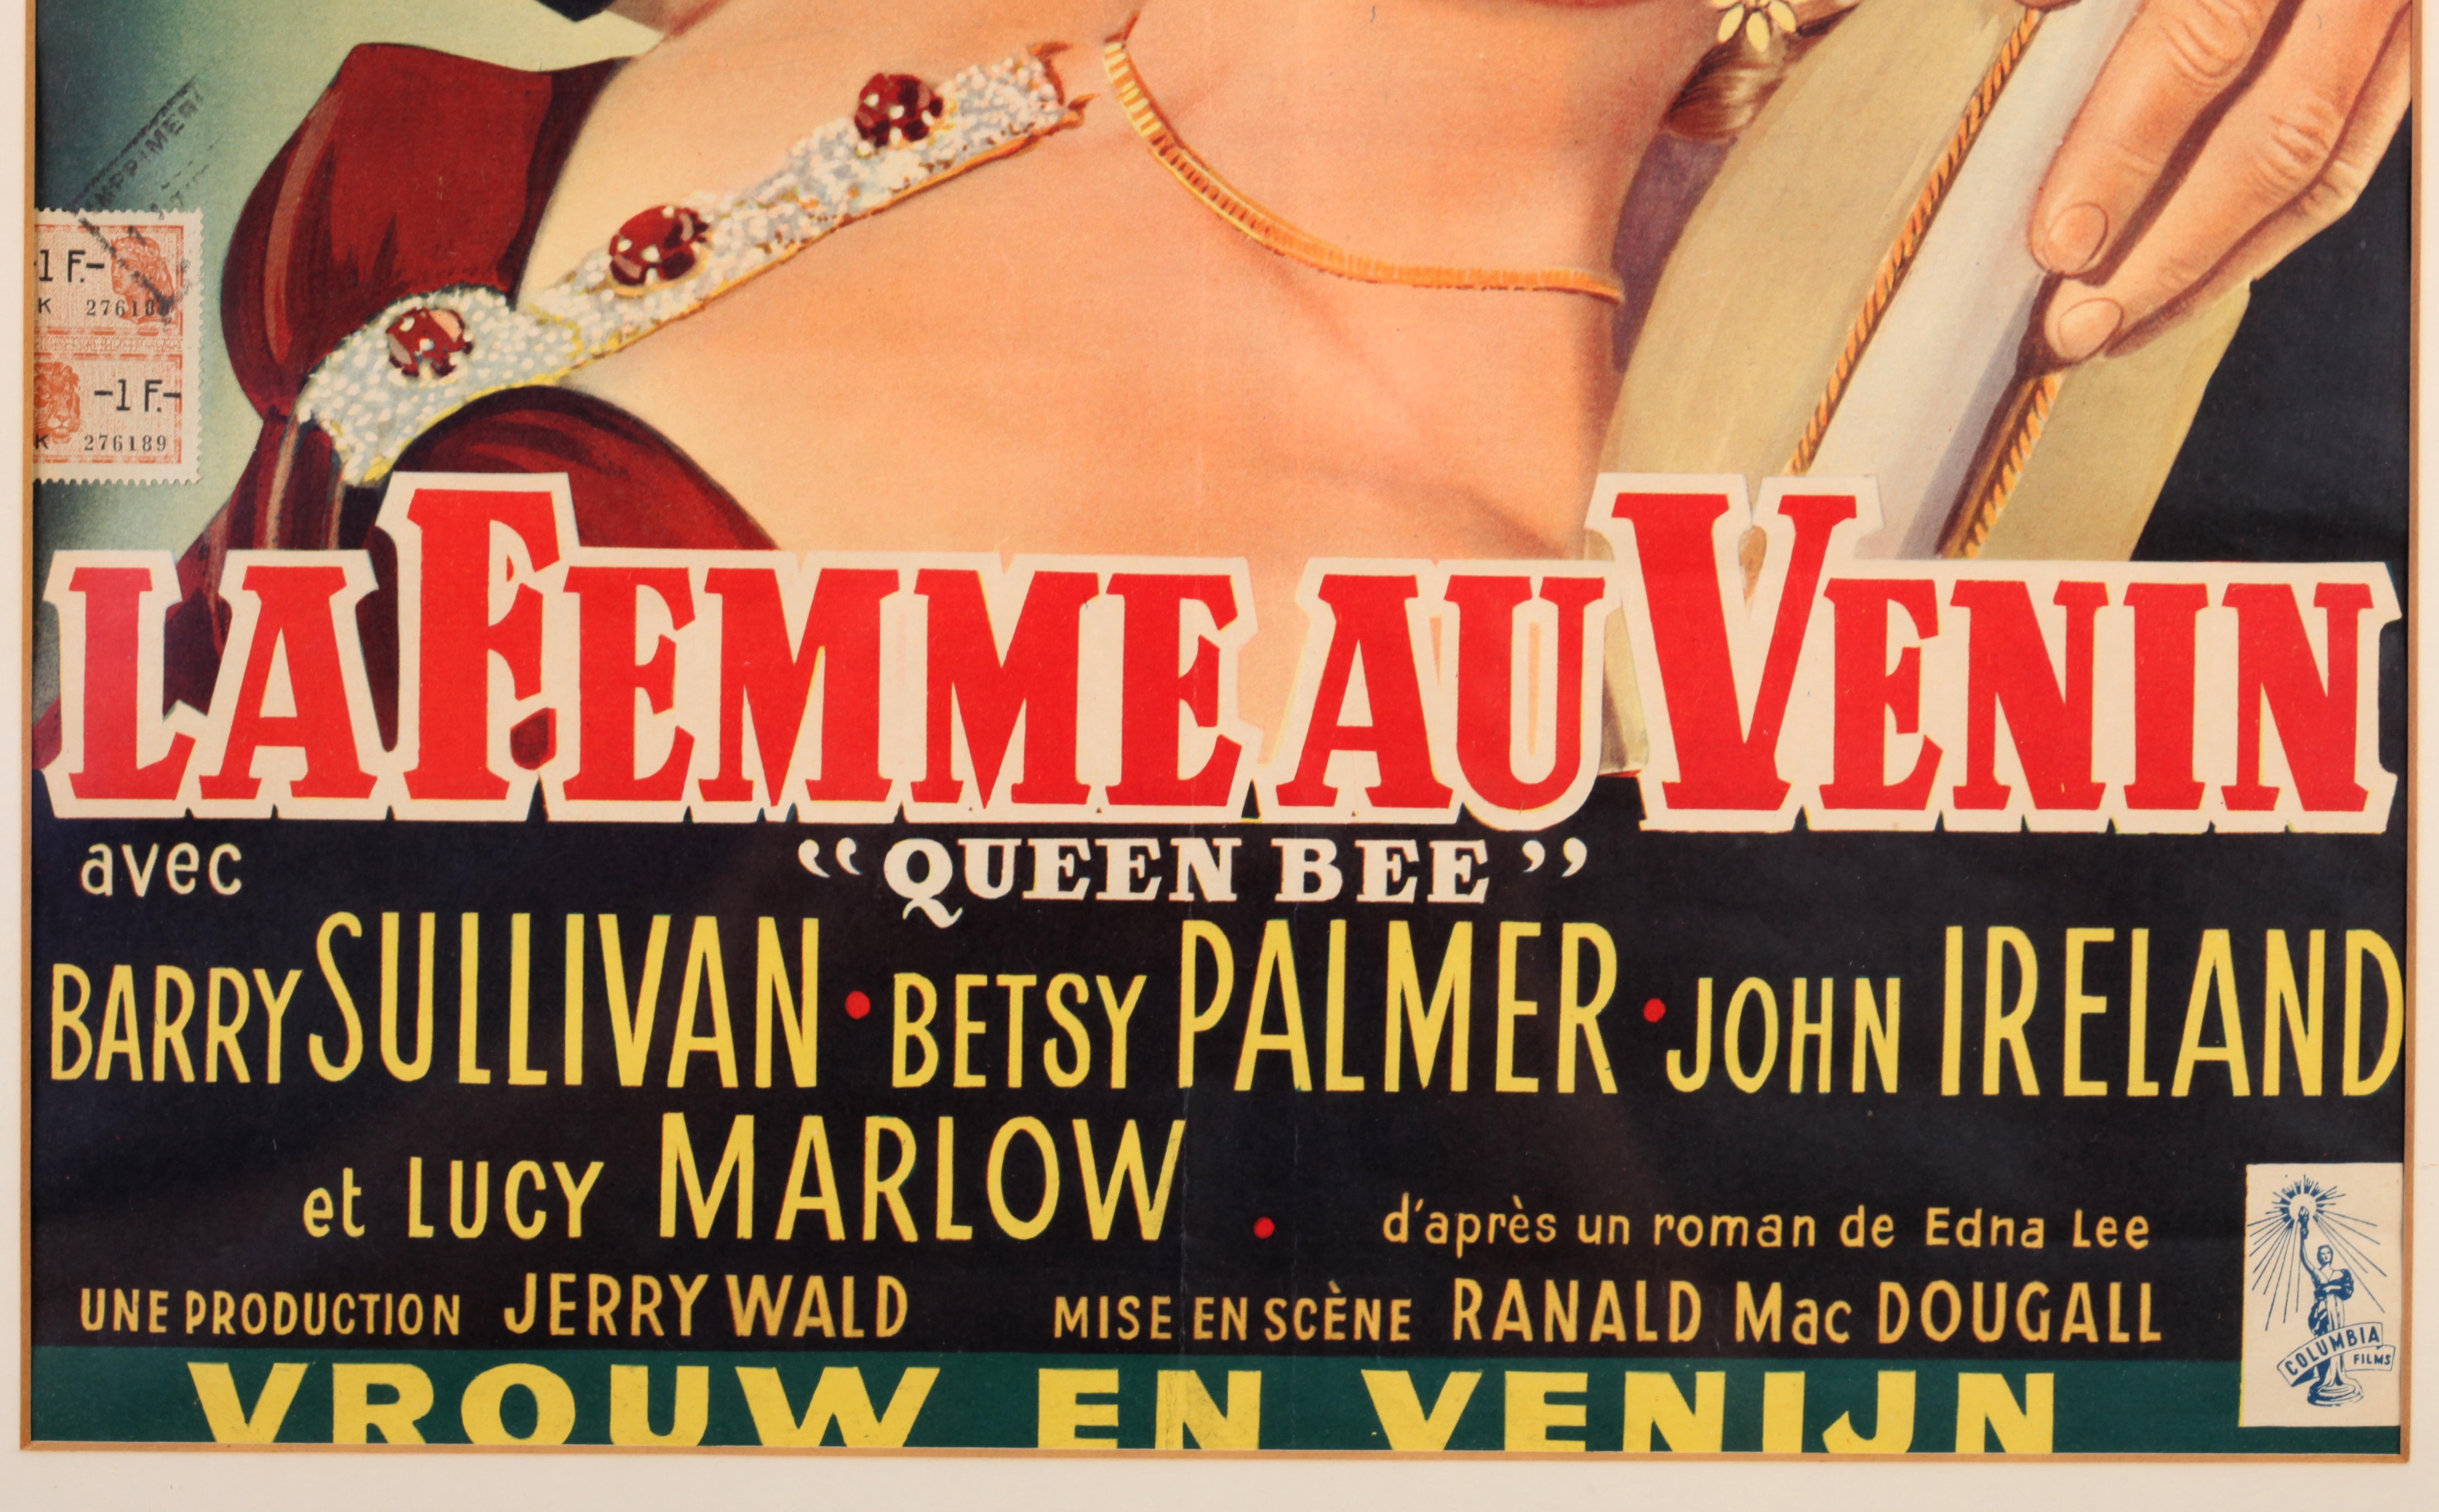 Joan Crawford und Ingrid Bergman, Vintage-Filmplakat, Queen Bee und Intermezzo im Angebot 1